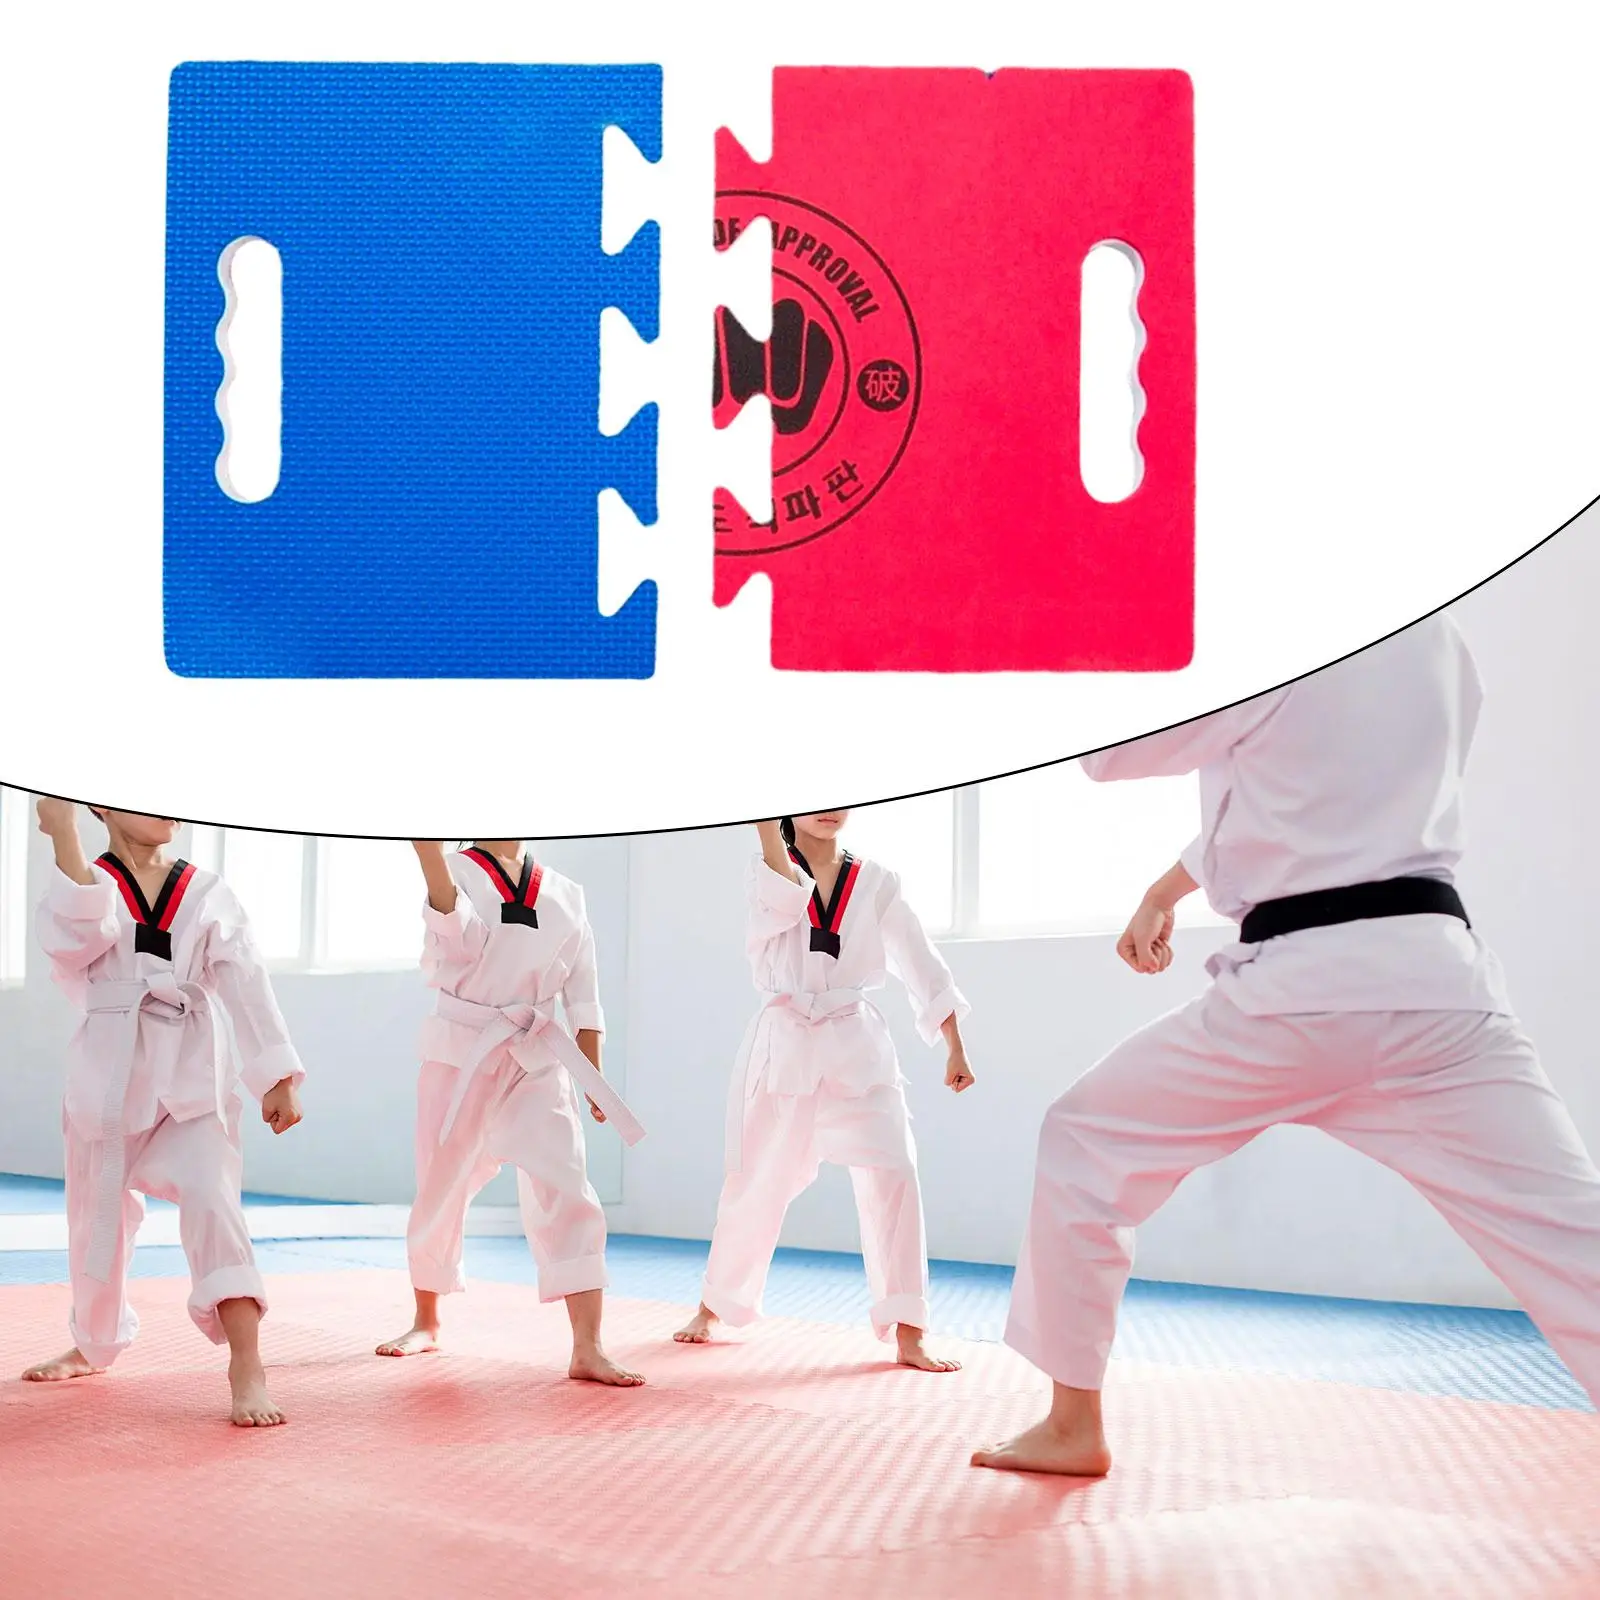 Taekwondo Board Rebreakable EVA Repeated Use Practicing for Kids Adults Easy to Assemble Boxing Equipment Karate Breaking Board